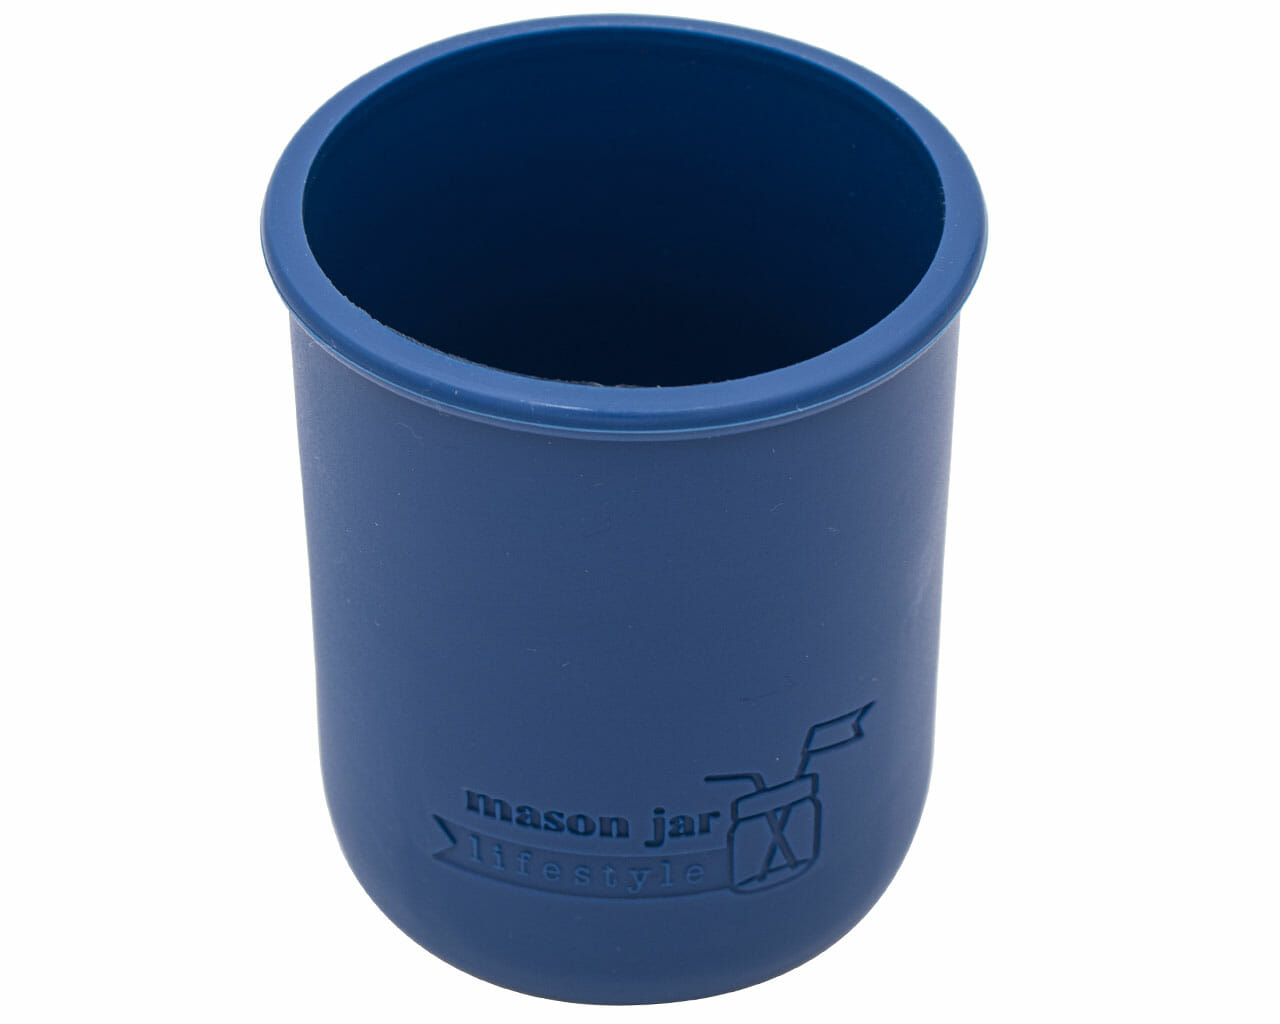 deep blue silicone sleeve koozie for 16oz wide mouth mason jars